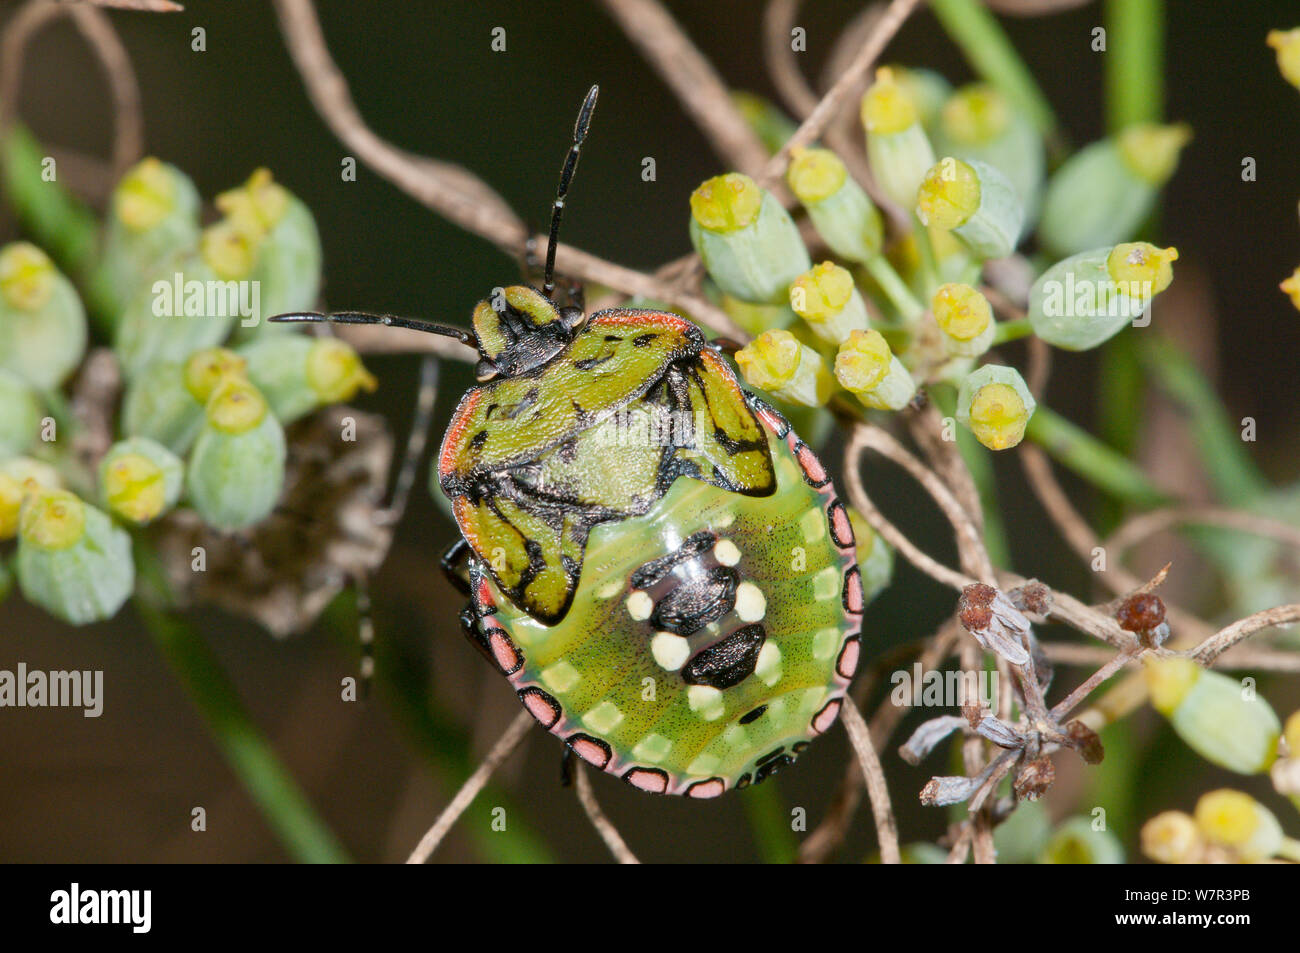 Shield Bug (Nezarla viridula) nymph, Podere Montecucco, Sugano, Orvieto, Italy, September Stock Photo